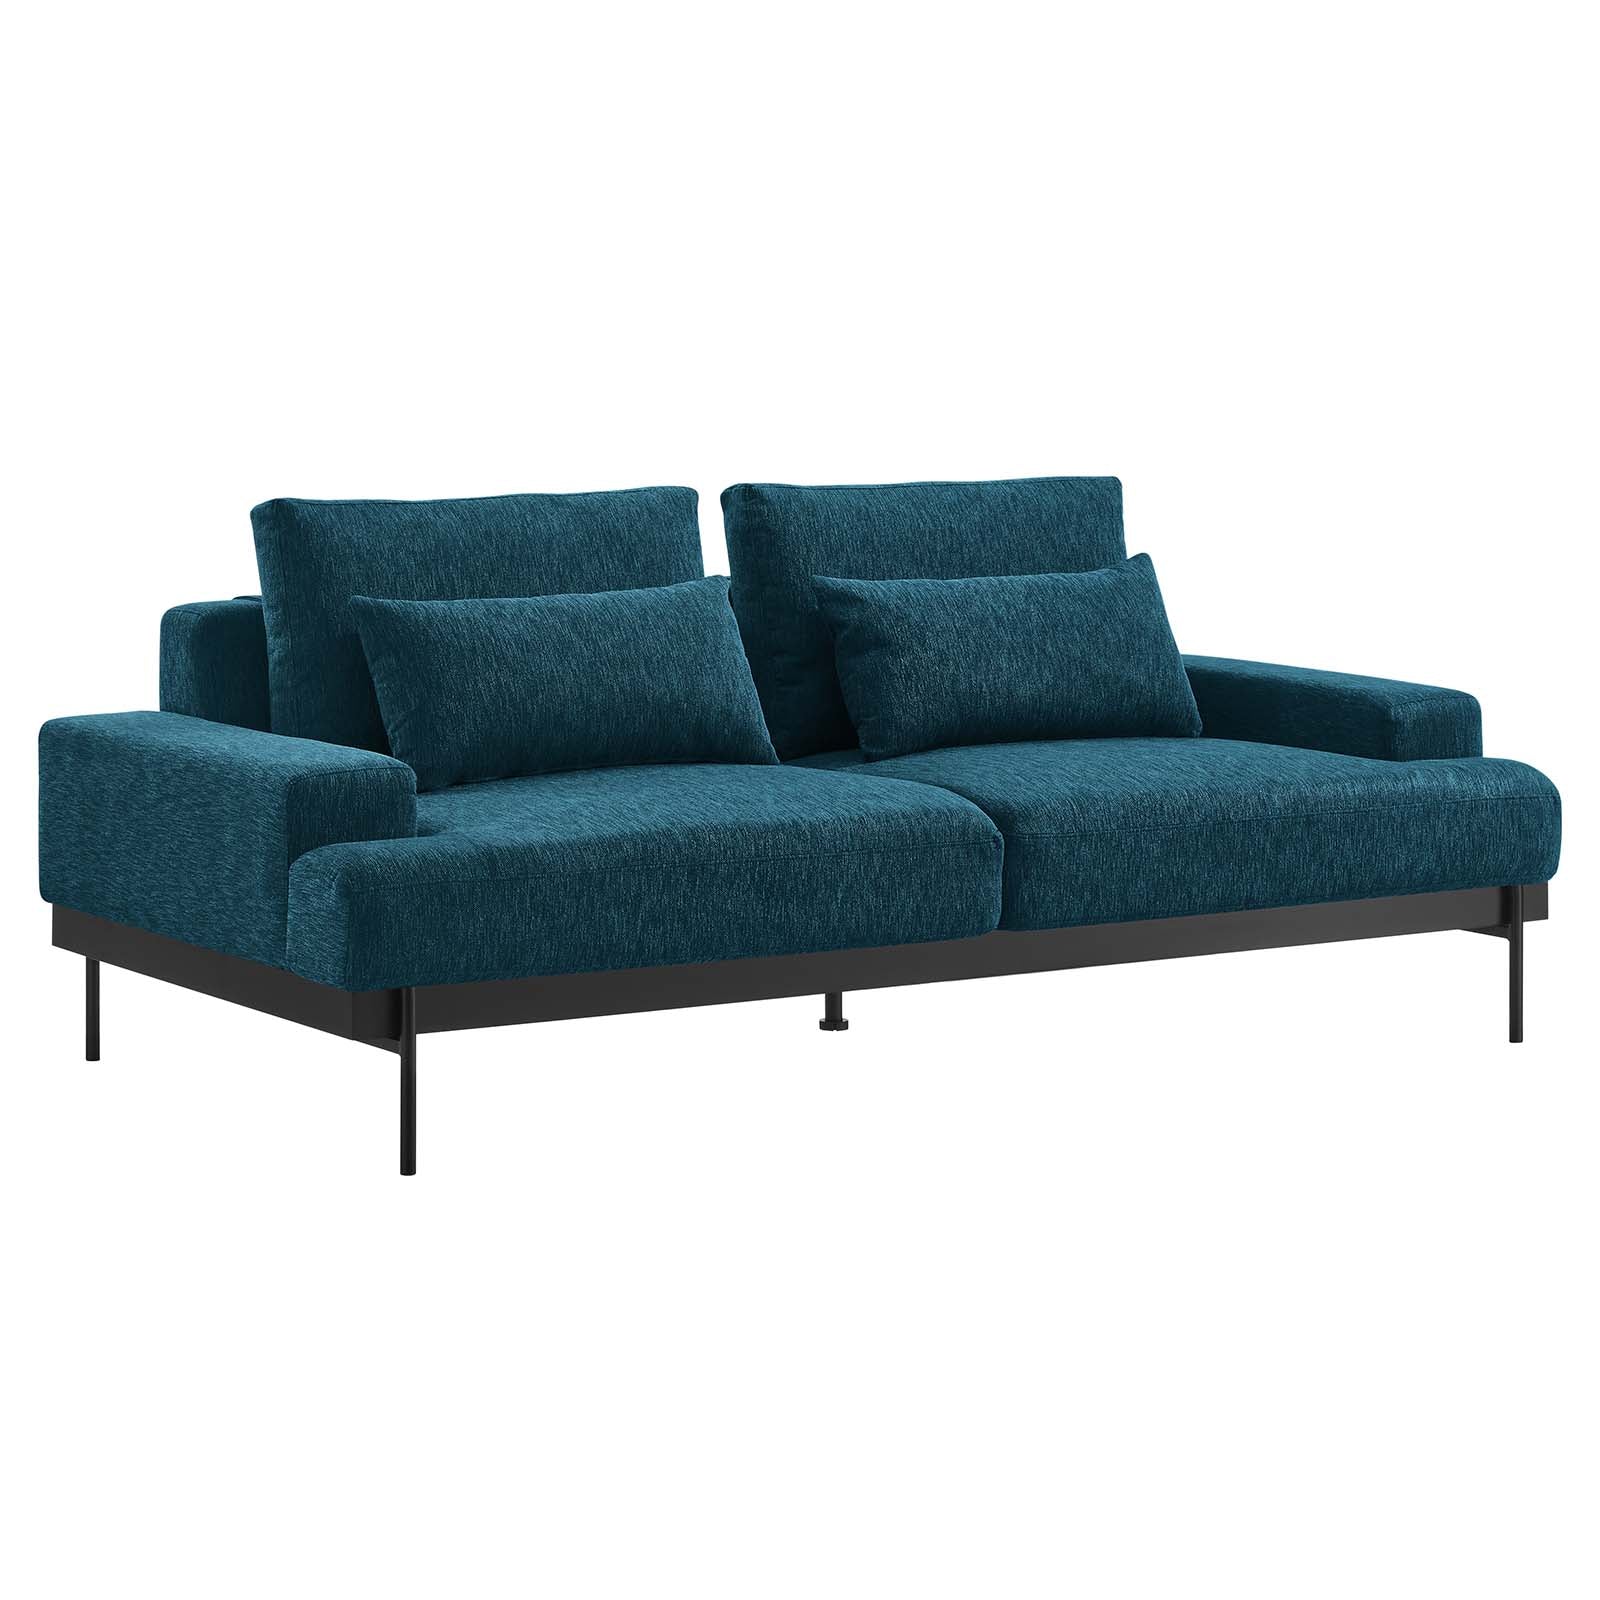 Proximity Upholstered Fabric Sofa - East Shore Modern Home Furnishings